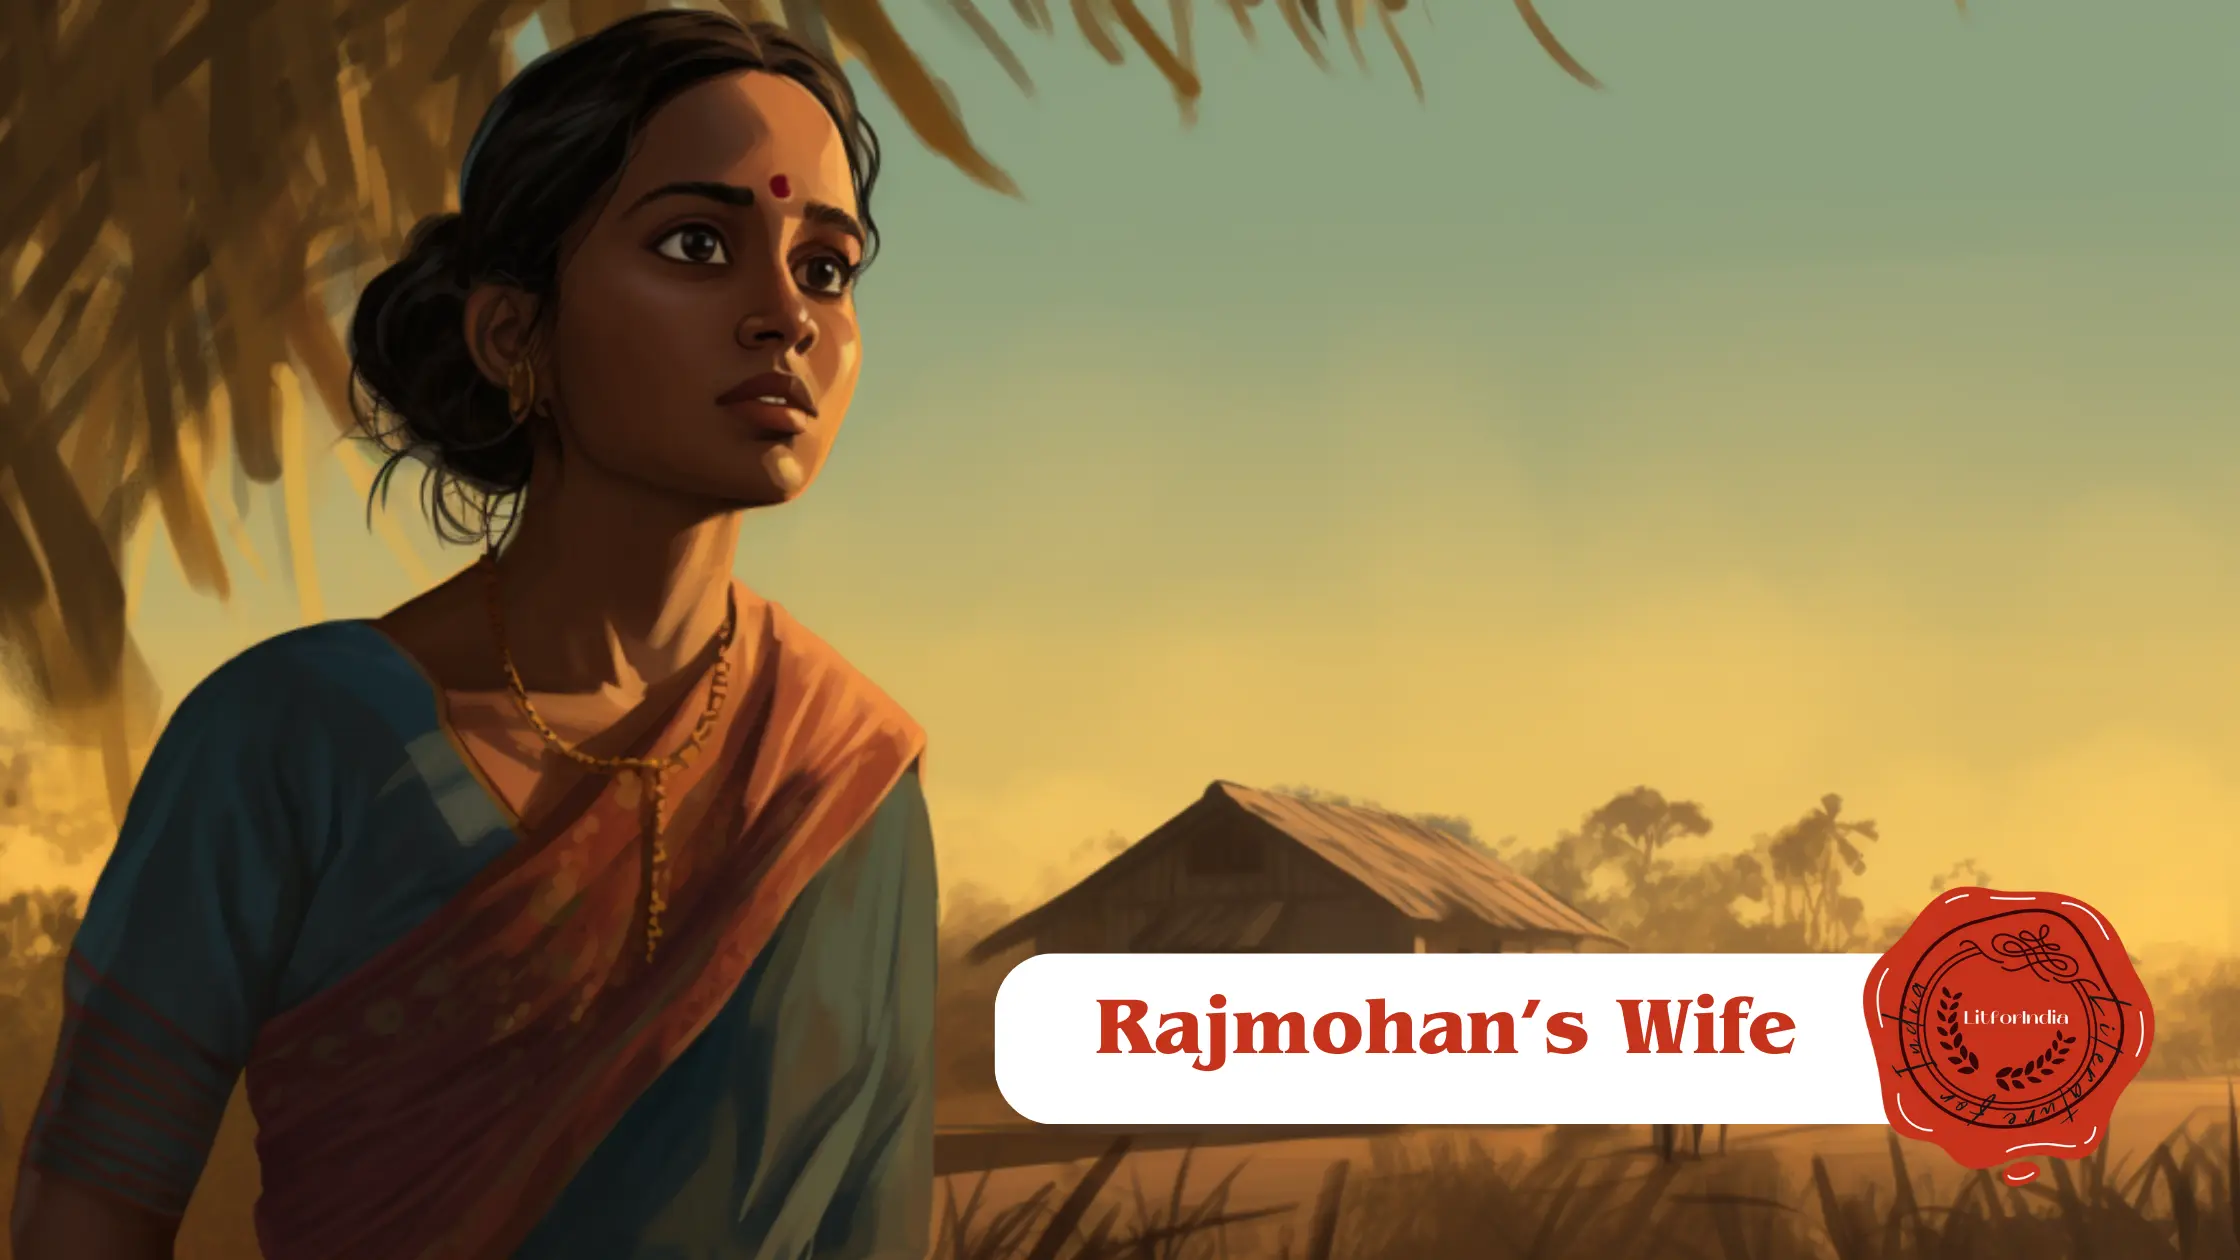 Summary of Rajmohan's wife